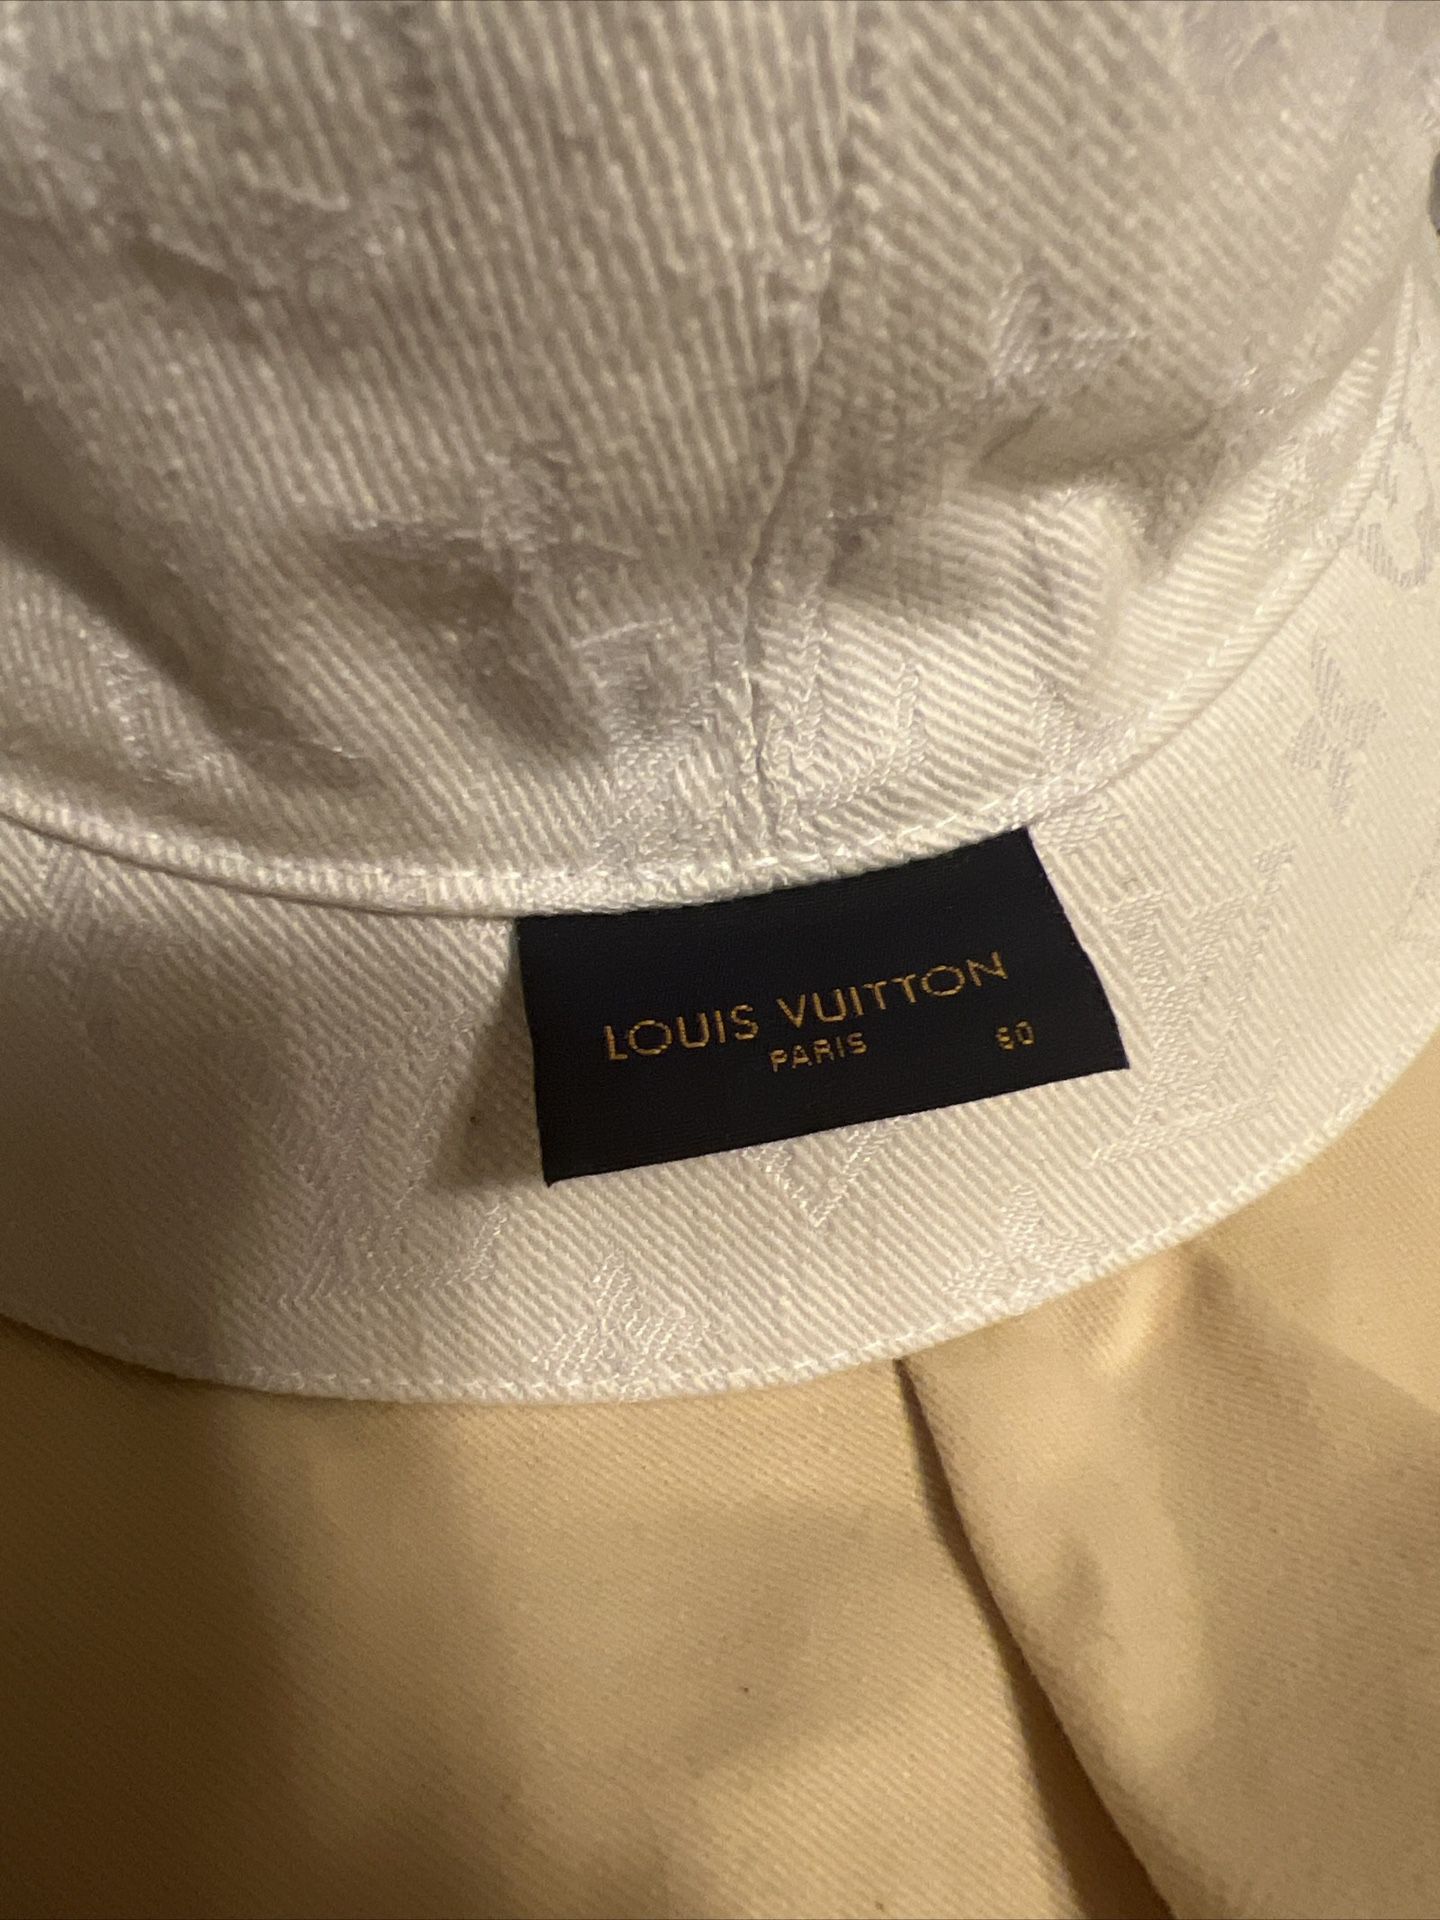 Louis Vuitton Cap for Sale in Miami Beach, FL - OfferUp